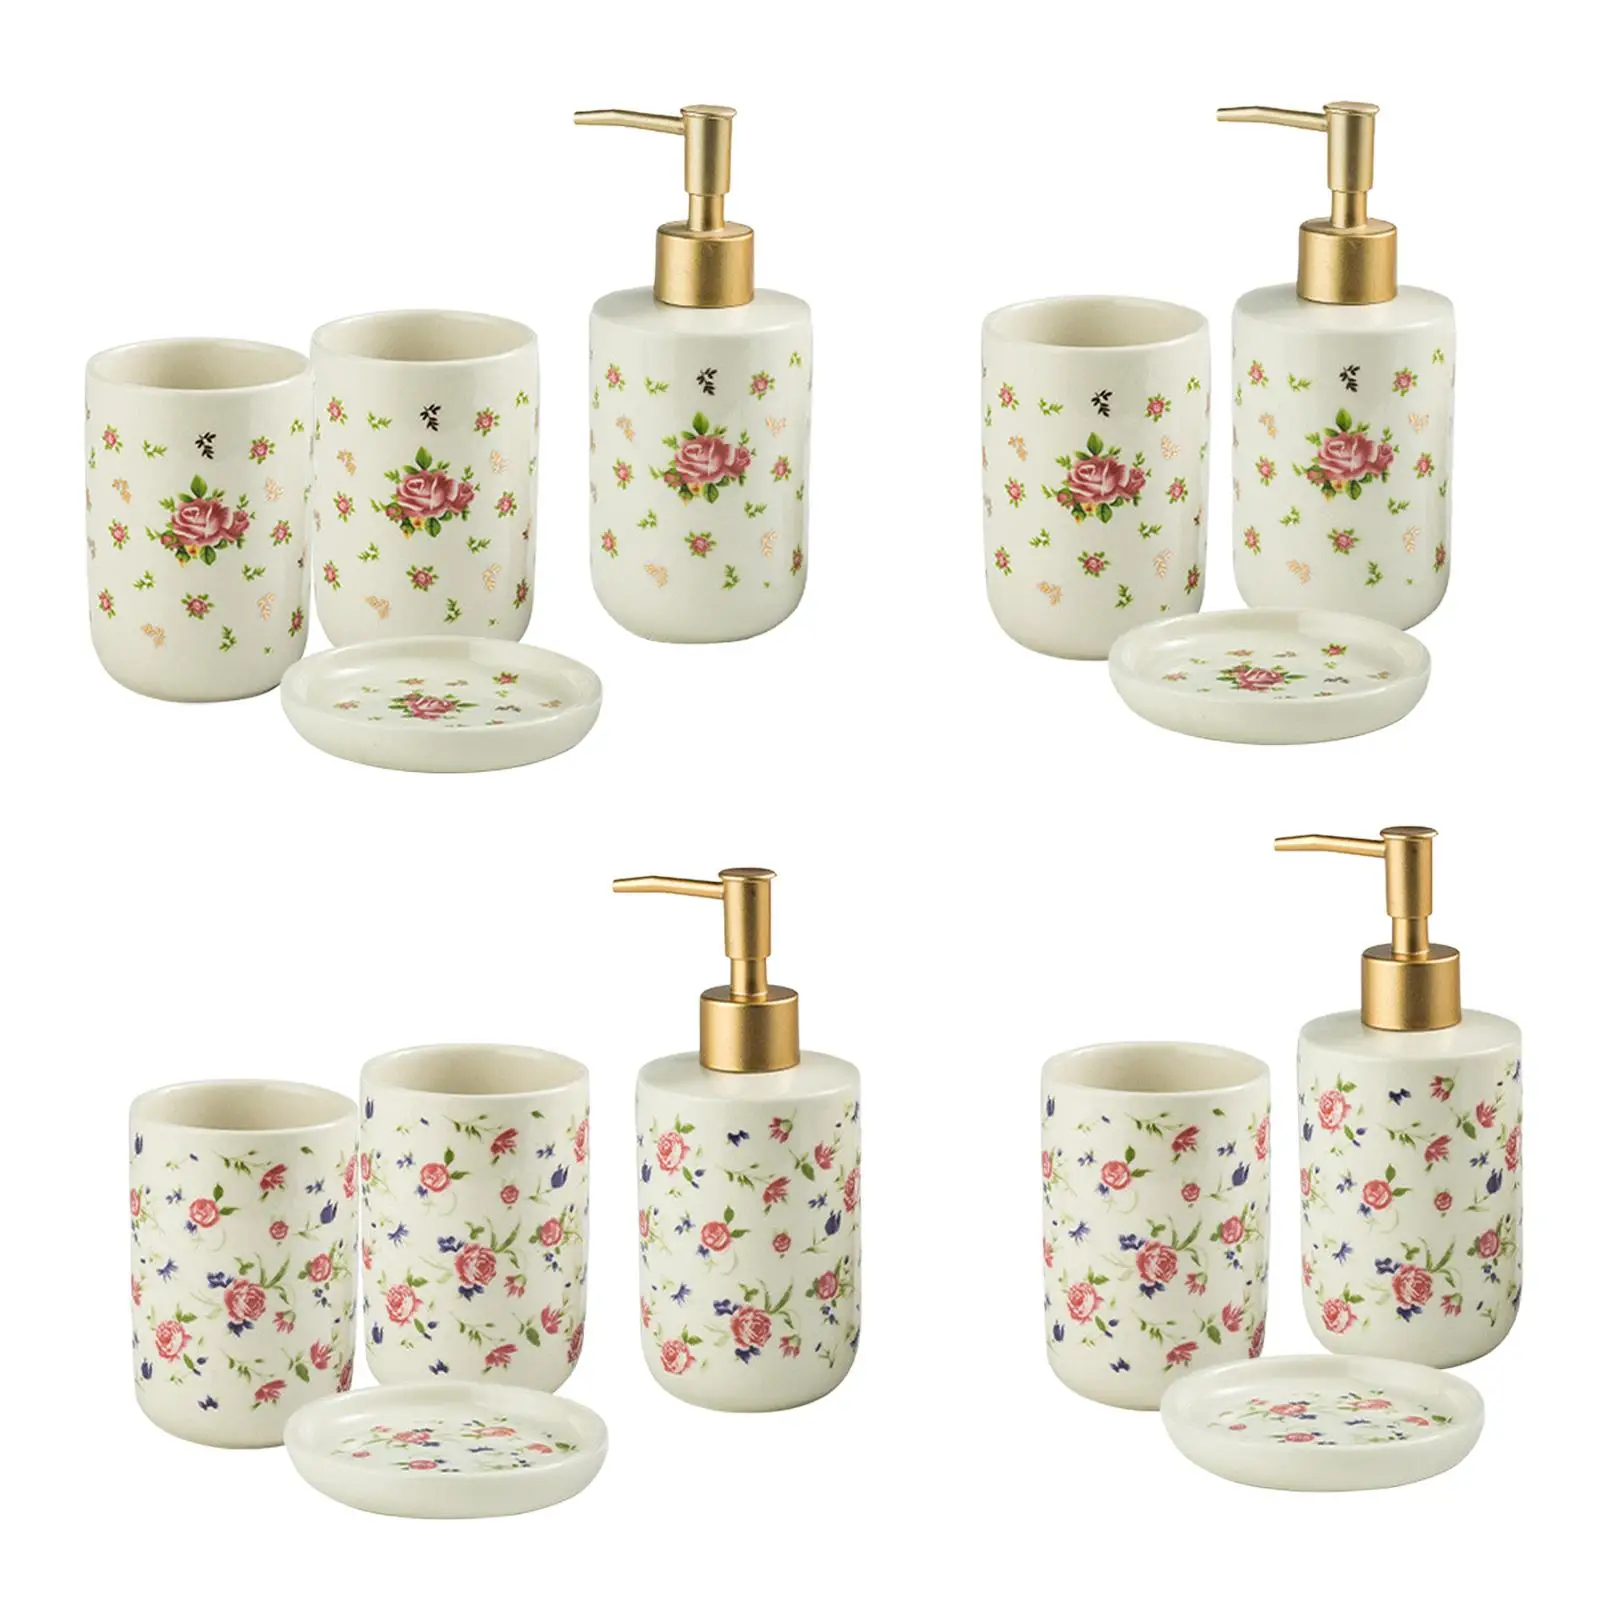 Ceramic Bathroom Accessory Set, Flower Pattern Luxury Toothbrush Holder, Soap Lotion Dispenser,